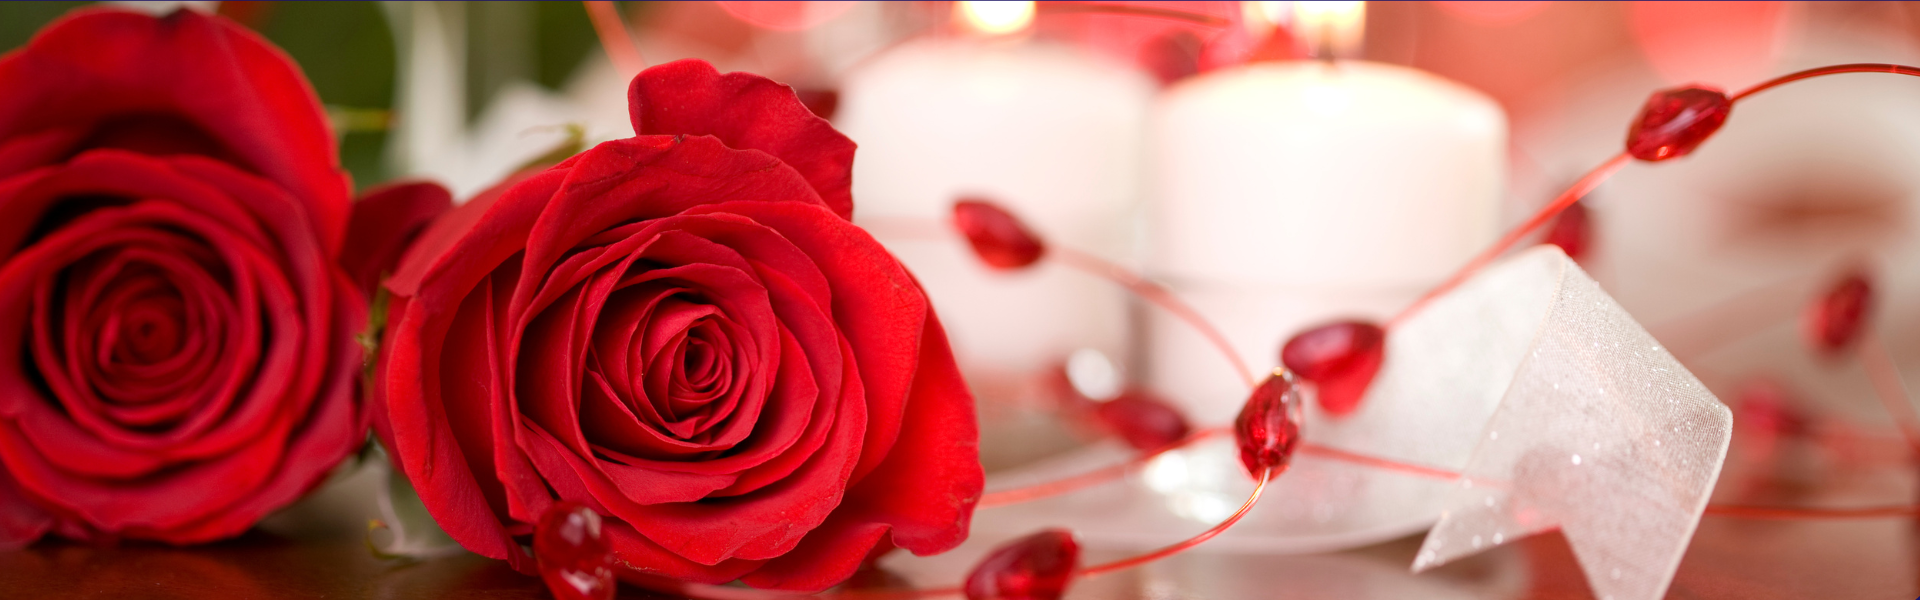 Event Decorators Listing Category DoEvents Valentine’s Day Decoration Valentine's Day Decoration